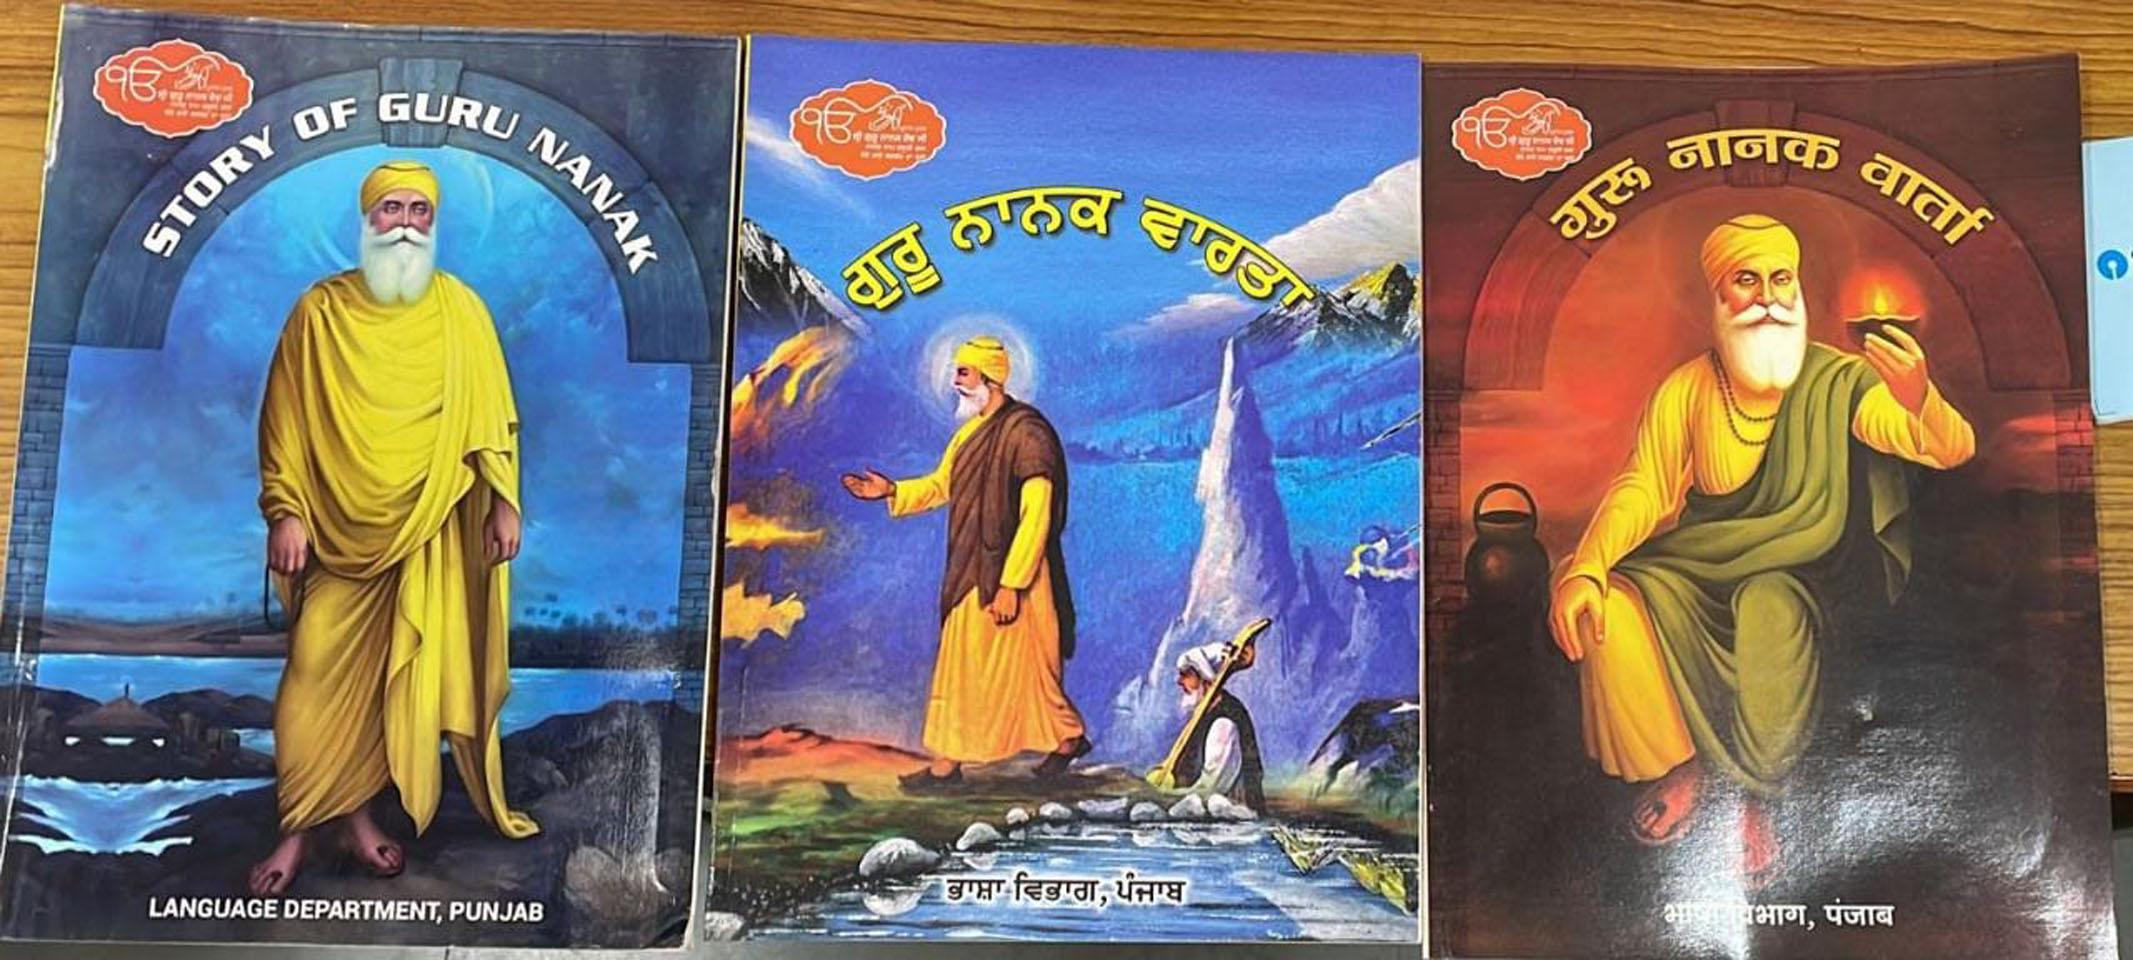 Books on Guru Nanak get a reprint after 51 years